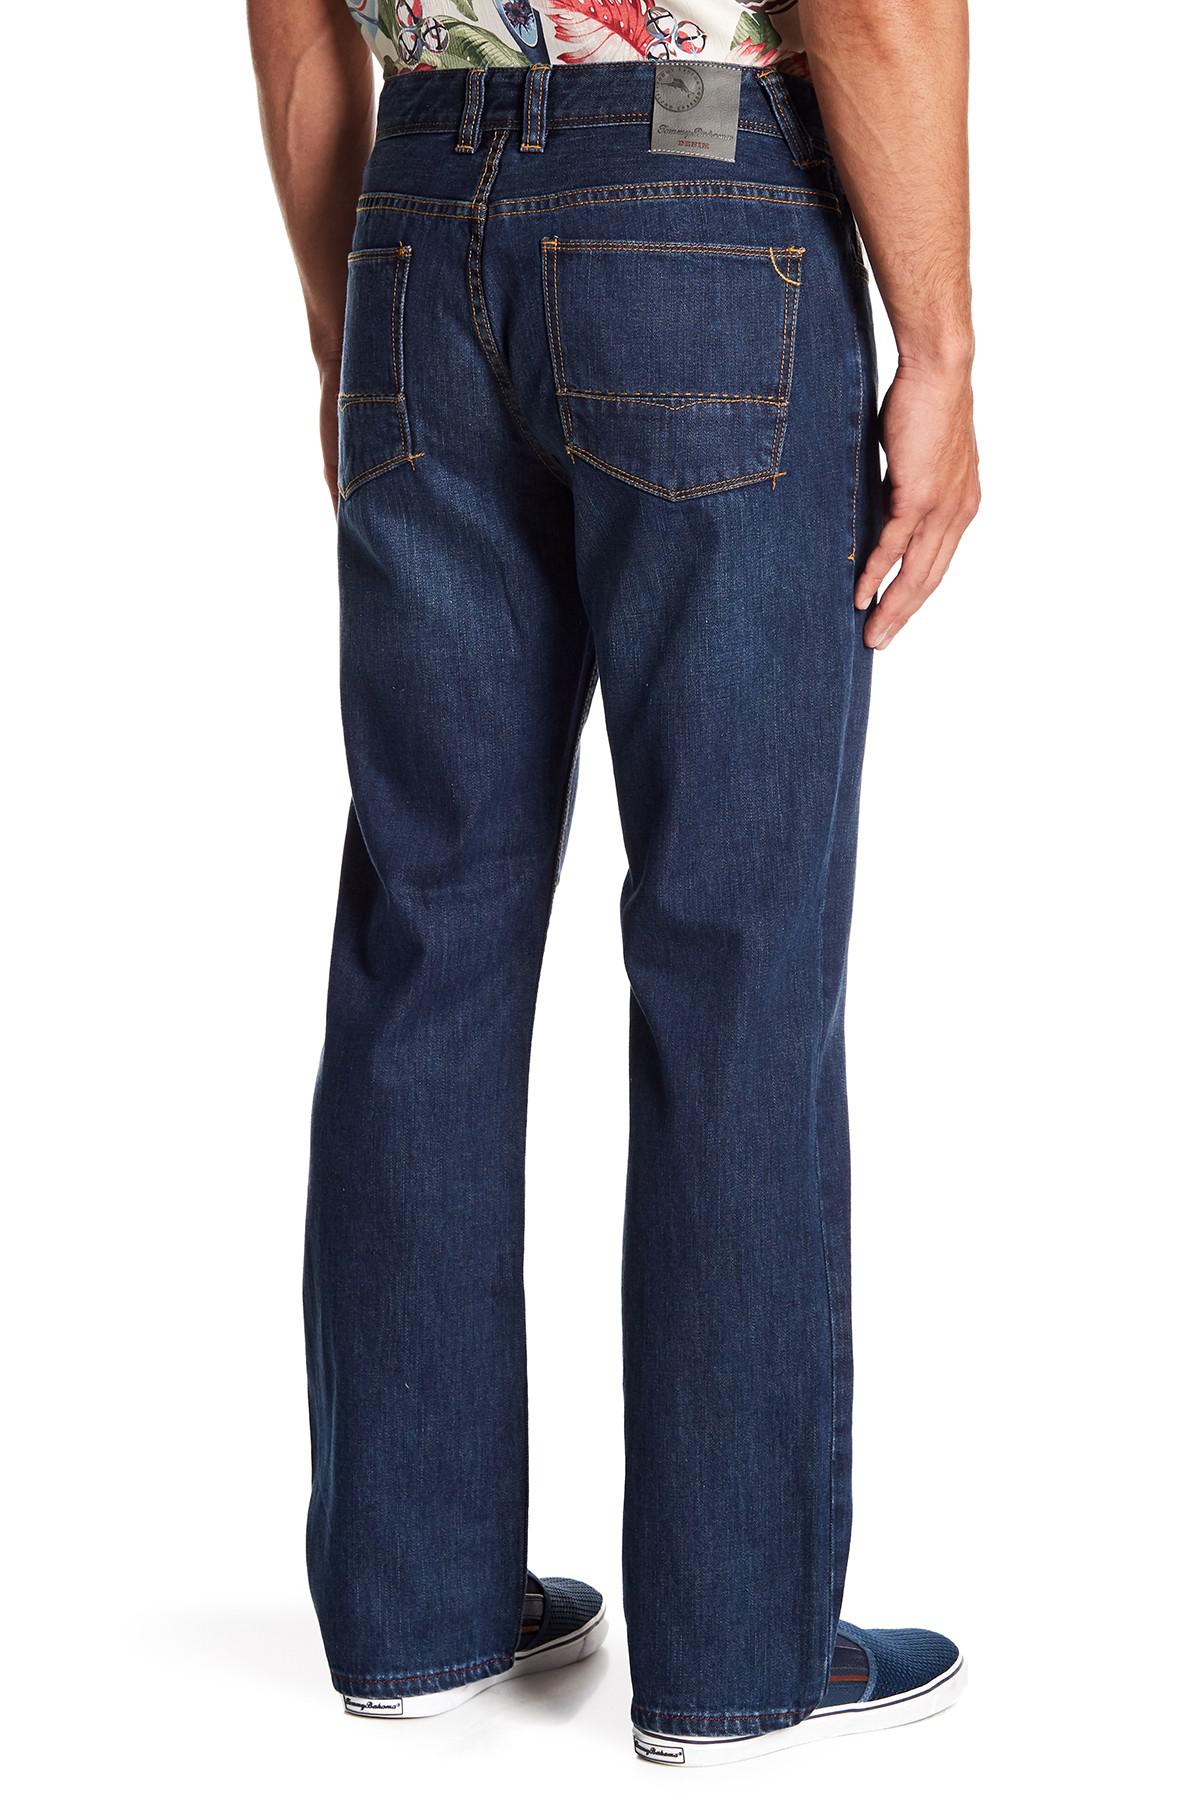 Tommy Bahama Denim 'santorini' Relaxed Fit Jeans in dk Indigo Wash ...